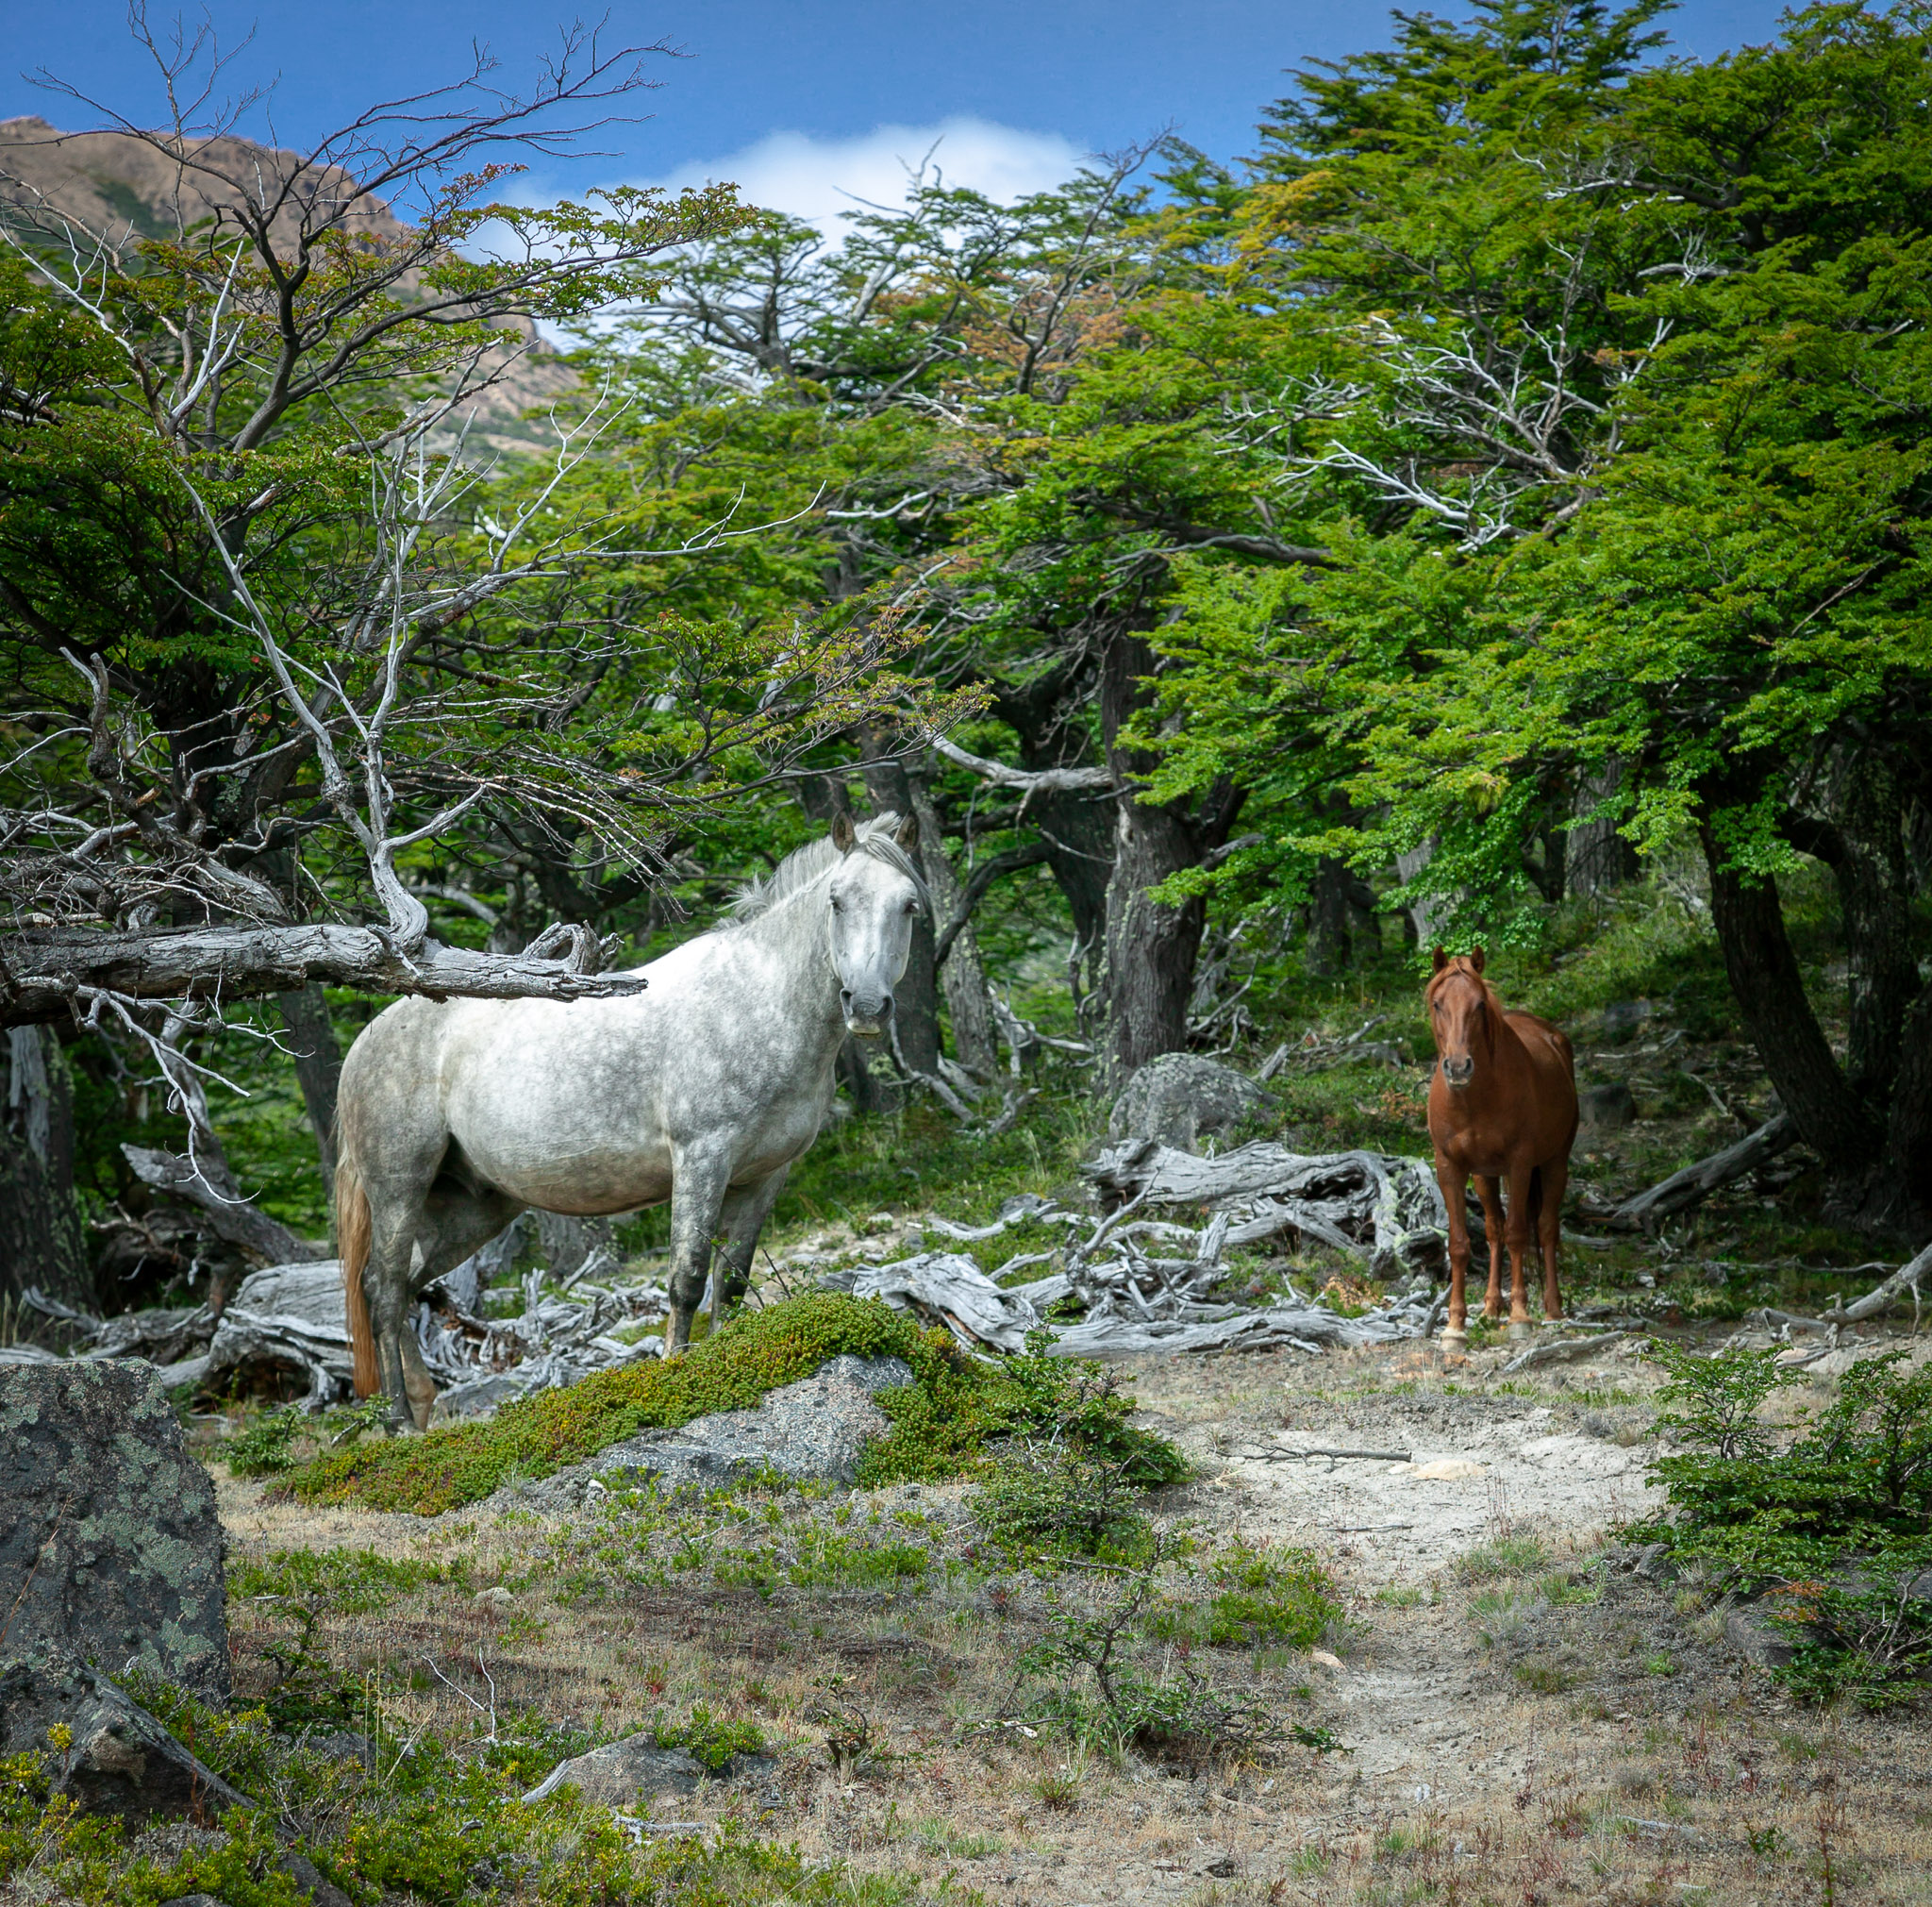 Free range horses in Rio Electro Valley